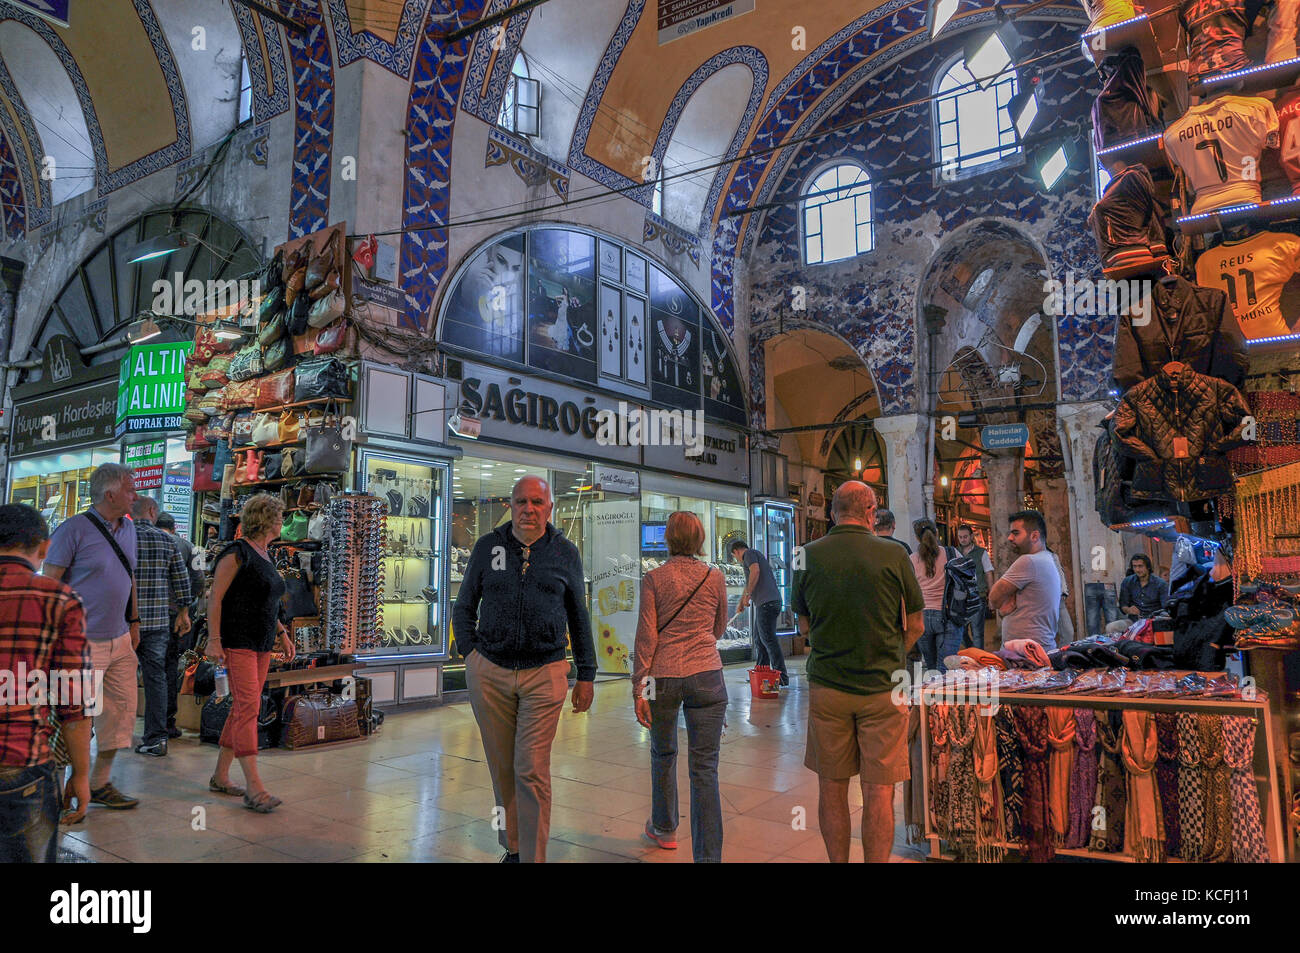 Grand Bazar, Kapali Carsi, Istanbul, Turquie Banque D'Images